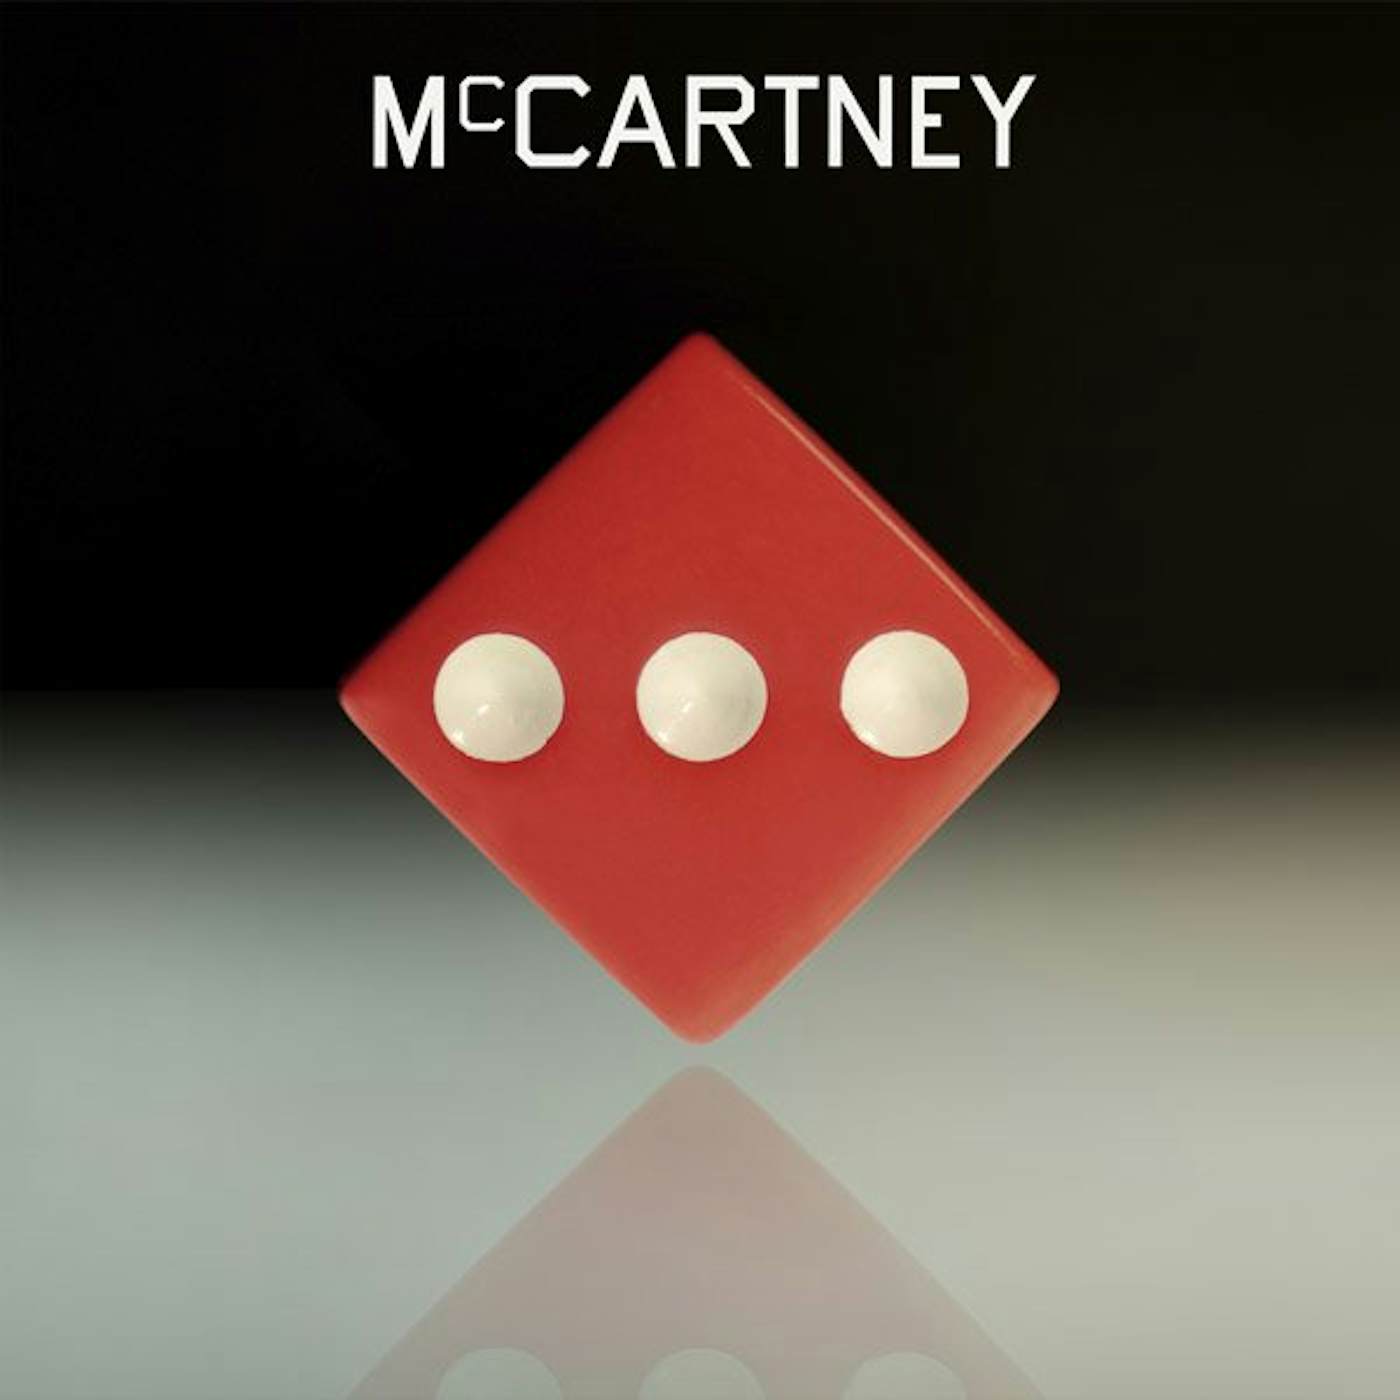 Paul McCartney McCartney III Vinyl Record